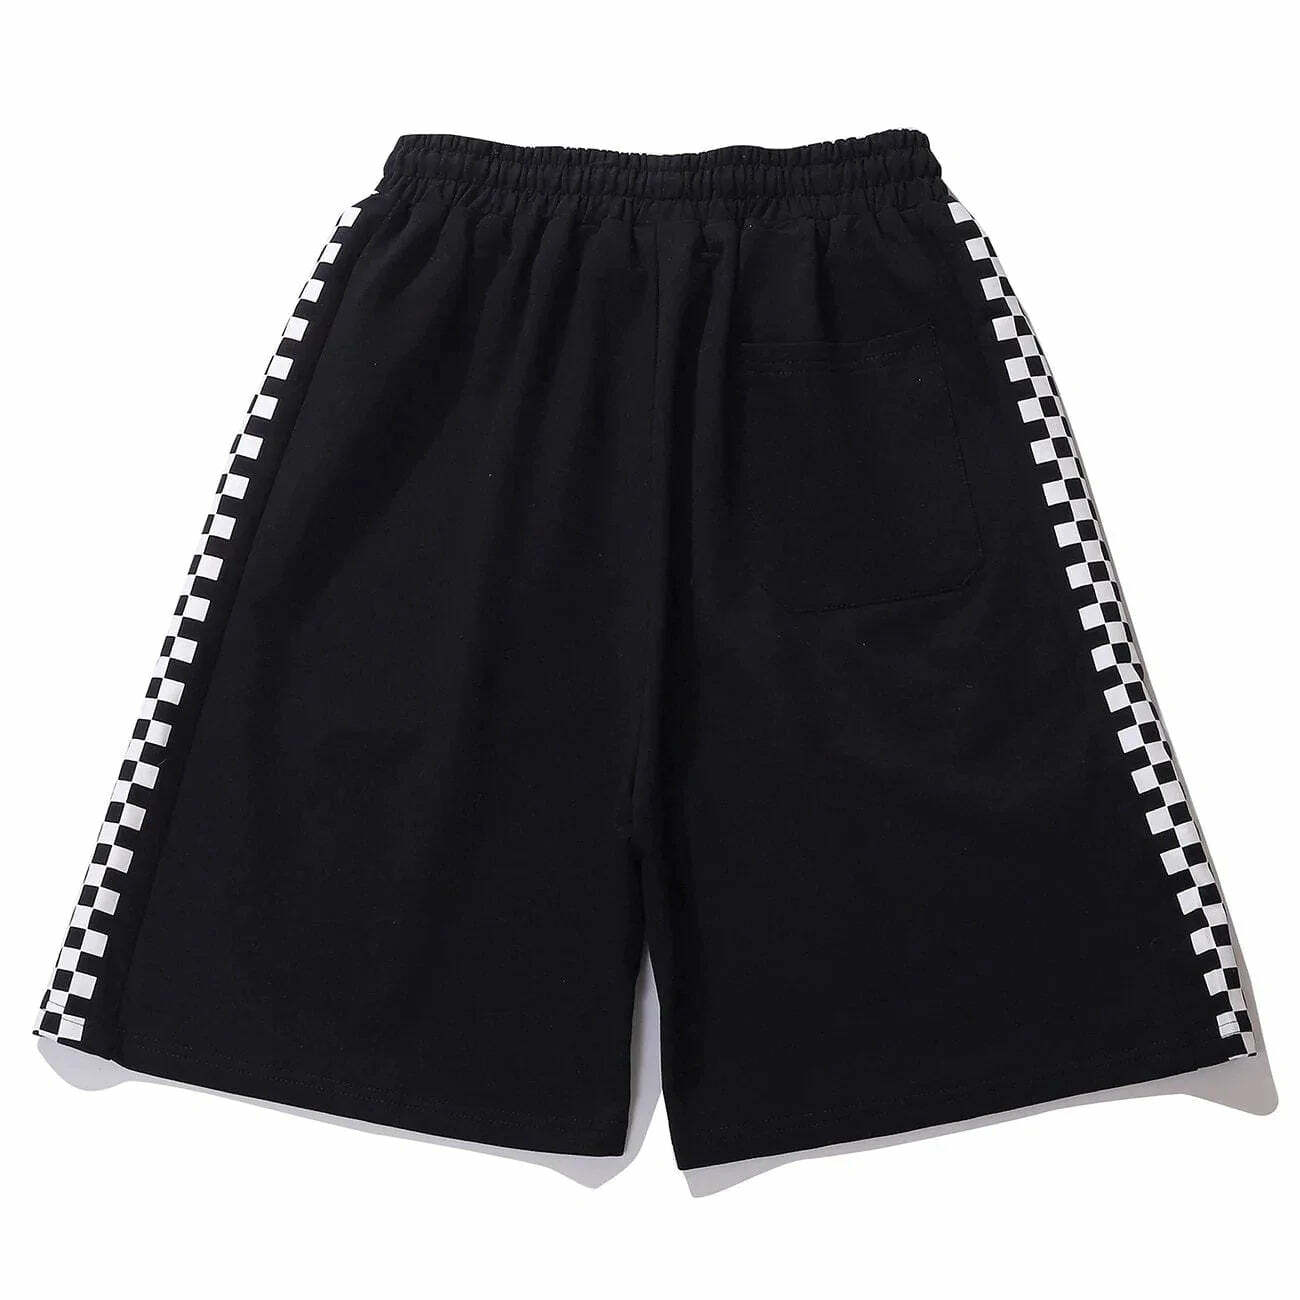 checkerboard print shorts edgy streetwear staple 5741